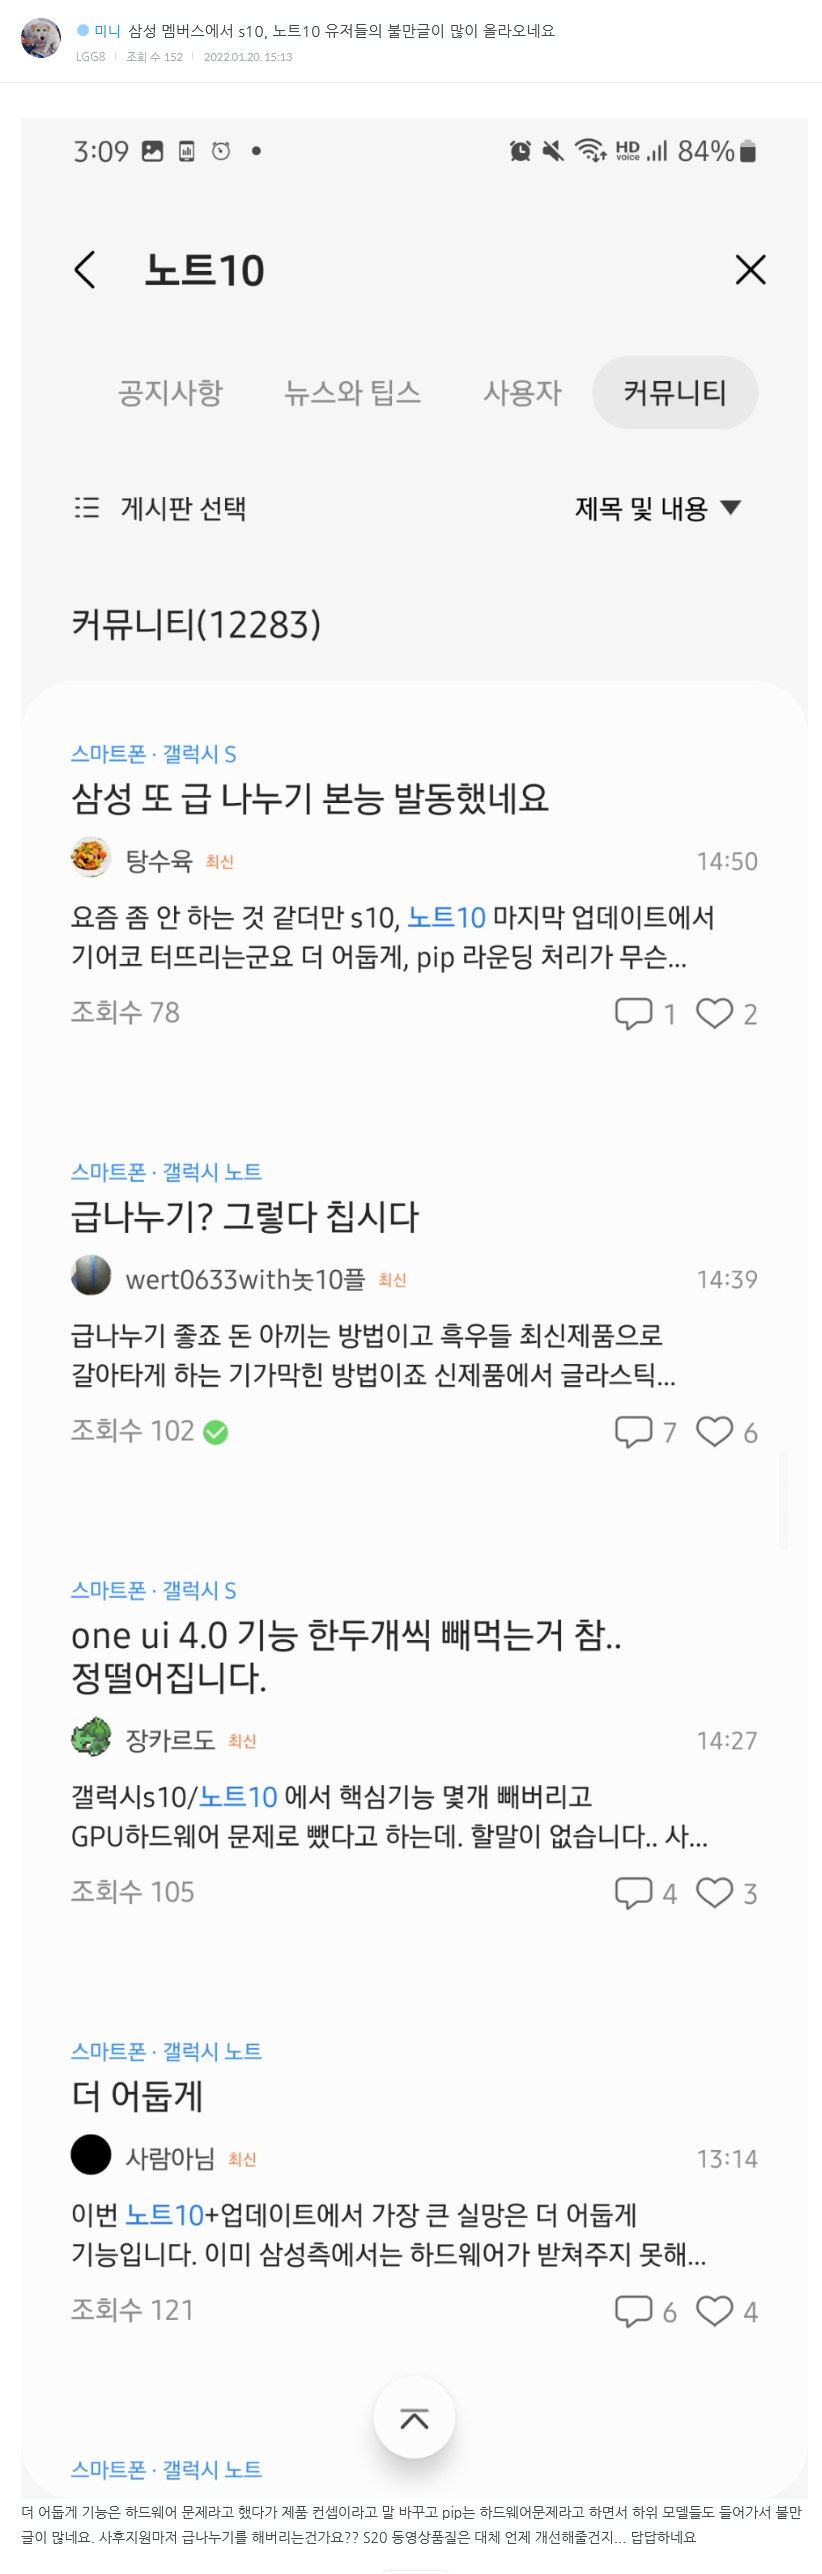 Screenshot 2022-01-20 at 15-31-44 삼성 멤버스에서 s10, 노트10 유저들의 불만글이 많이 올라오네요 - 미코.png